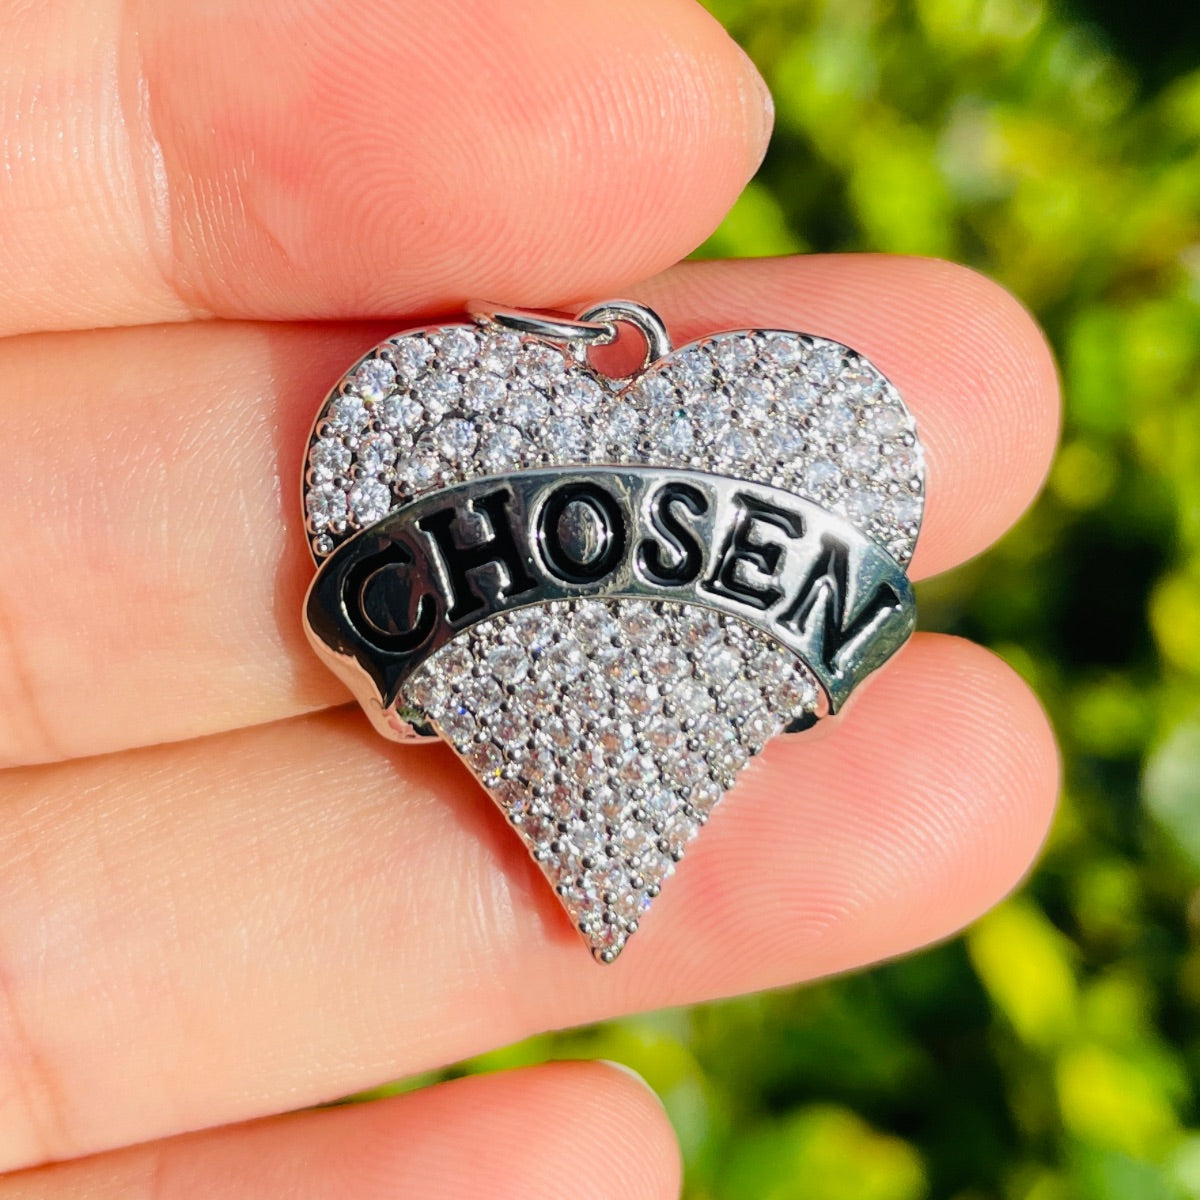 10pcs/lot 25.6*23.6mm CZ Pave Heart Chosen Word Charms Silver CZ Paved Charms Hearts New Charms Arrivals Charms Beads Beyond